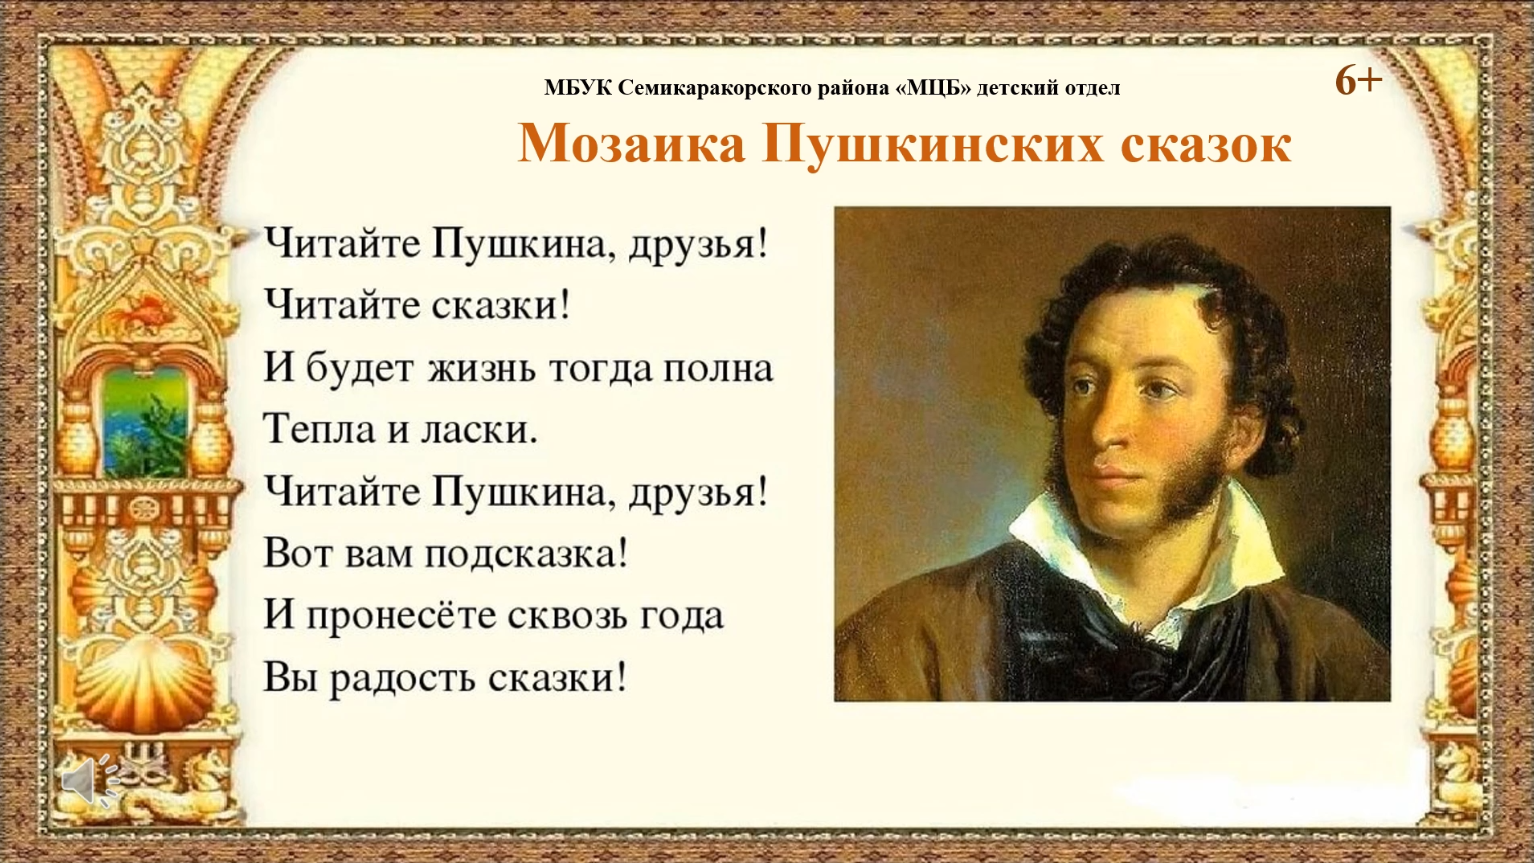 Сказки Пушкина цитаты